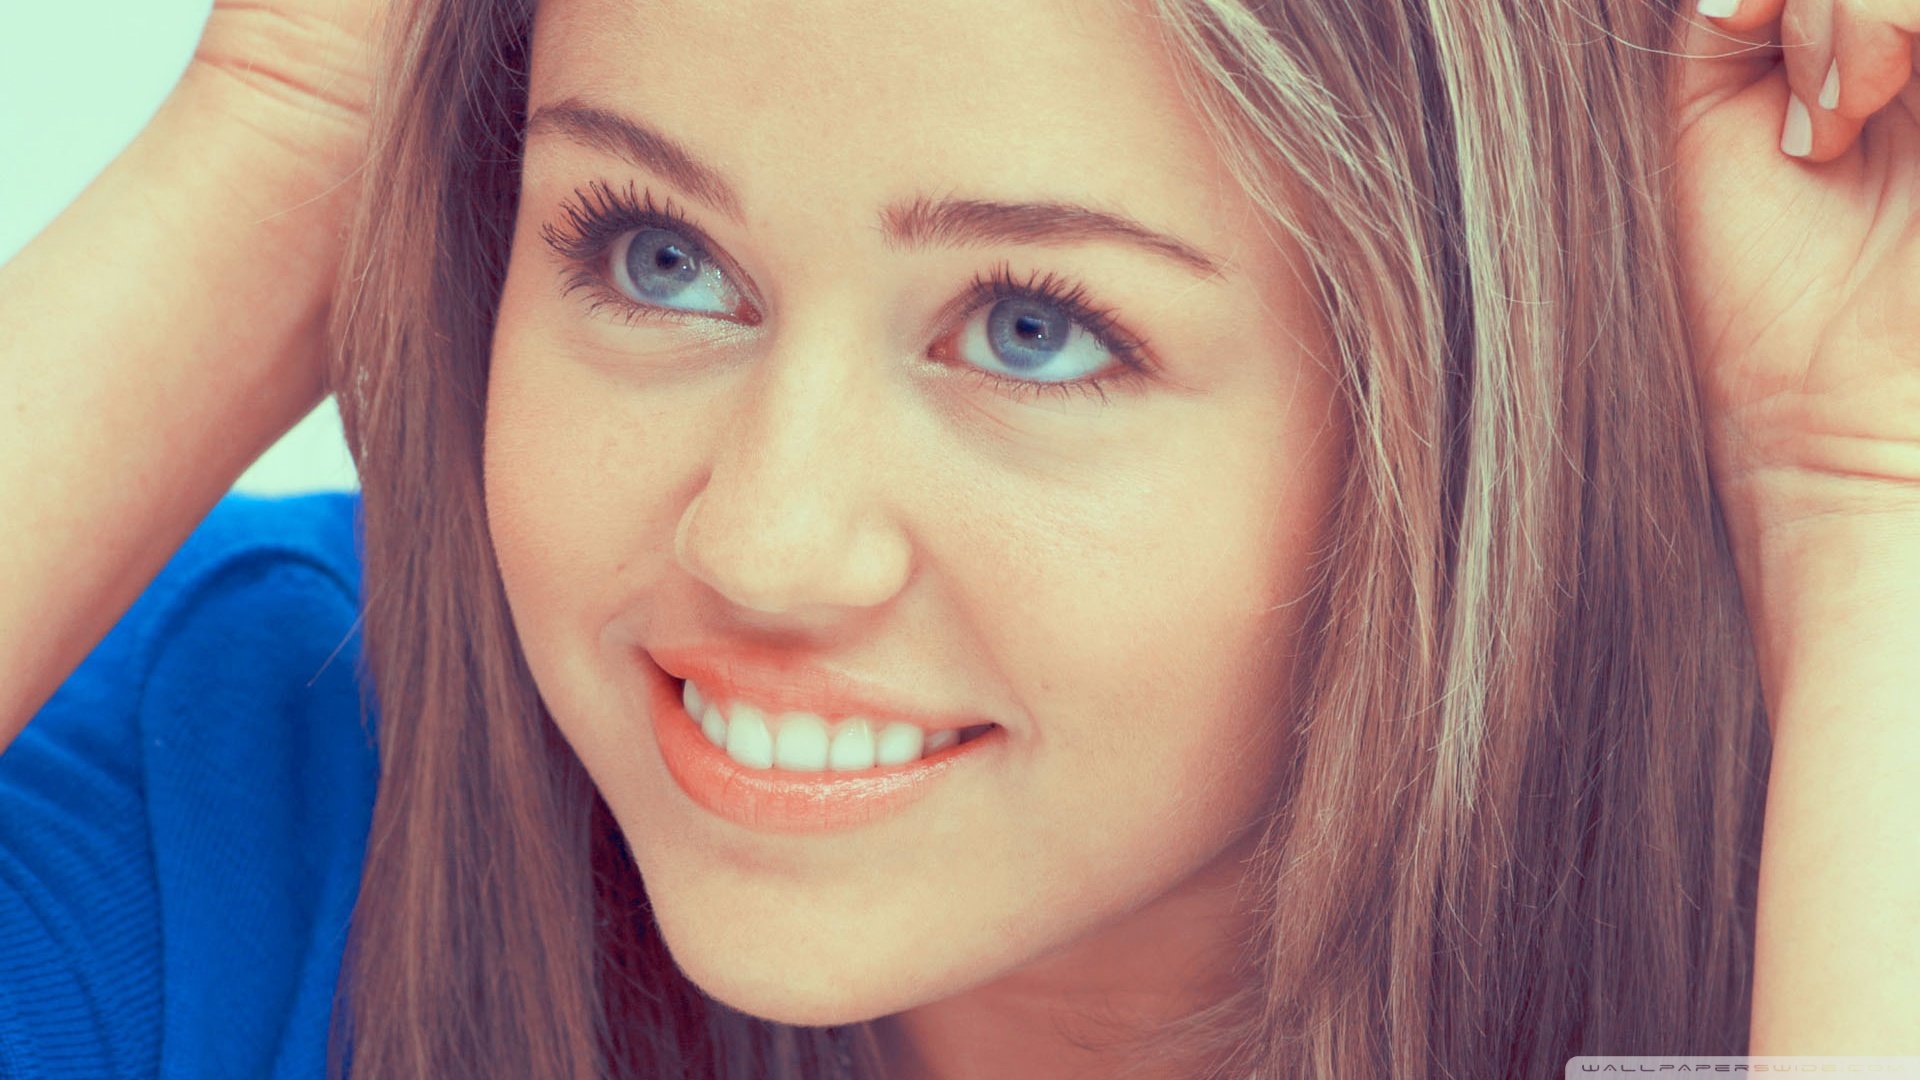 Best Miley Cyrus wallpaper ID:80941 for High Resolution full hd 1080p desktop